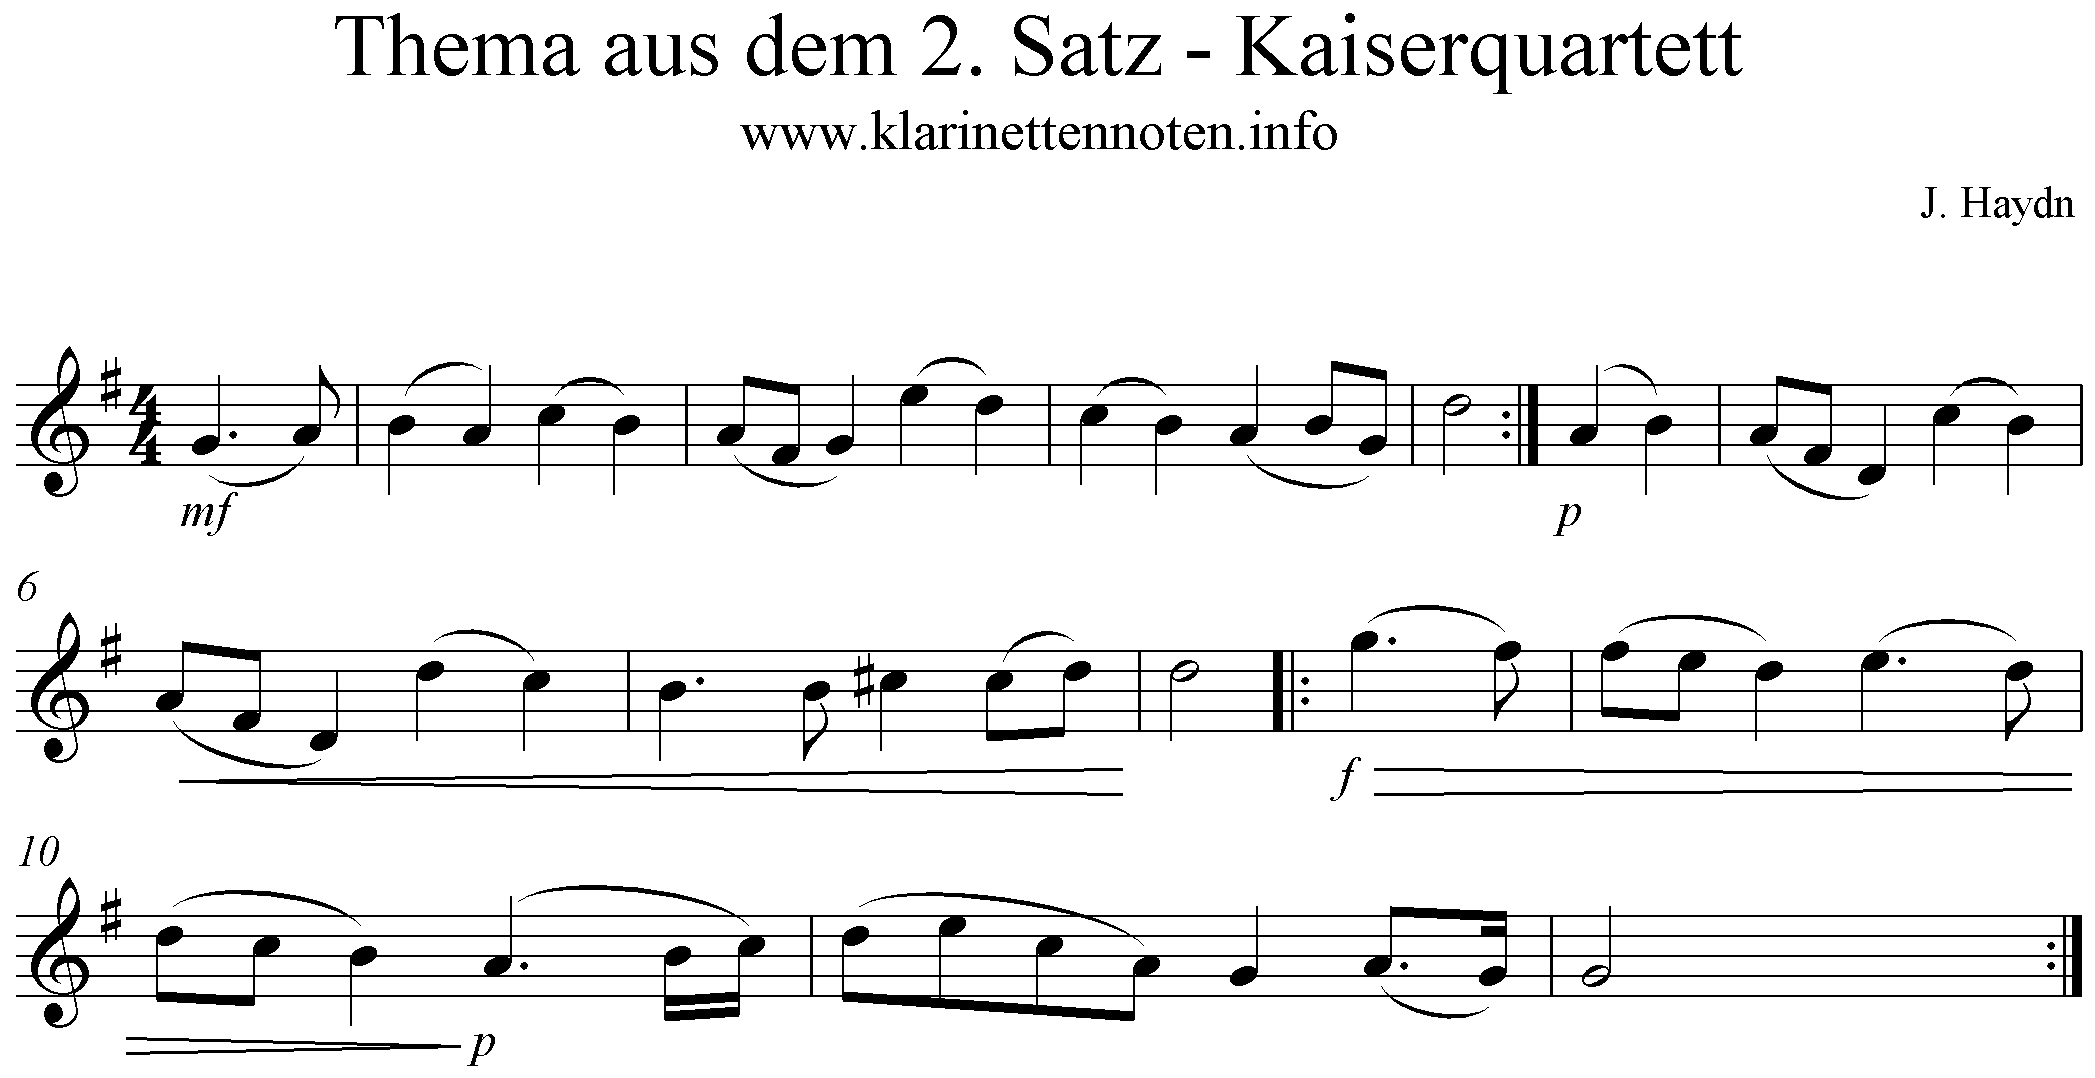 Kaiserquartett, 2. Satz, Thema, Klarinette, Clarinet